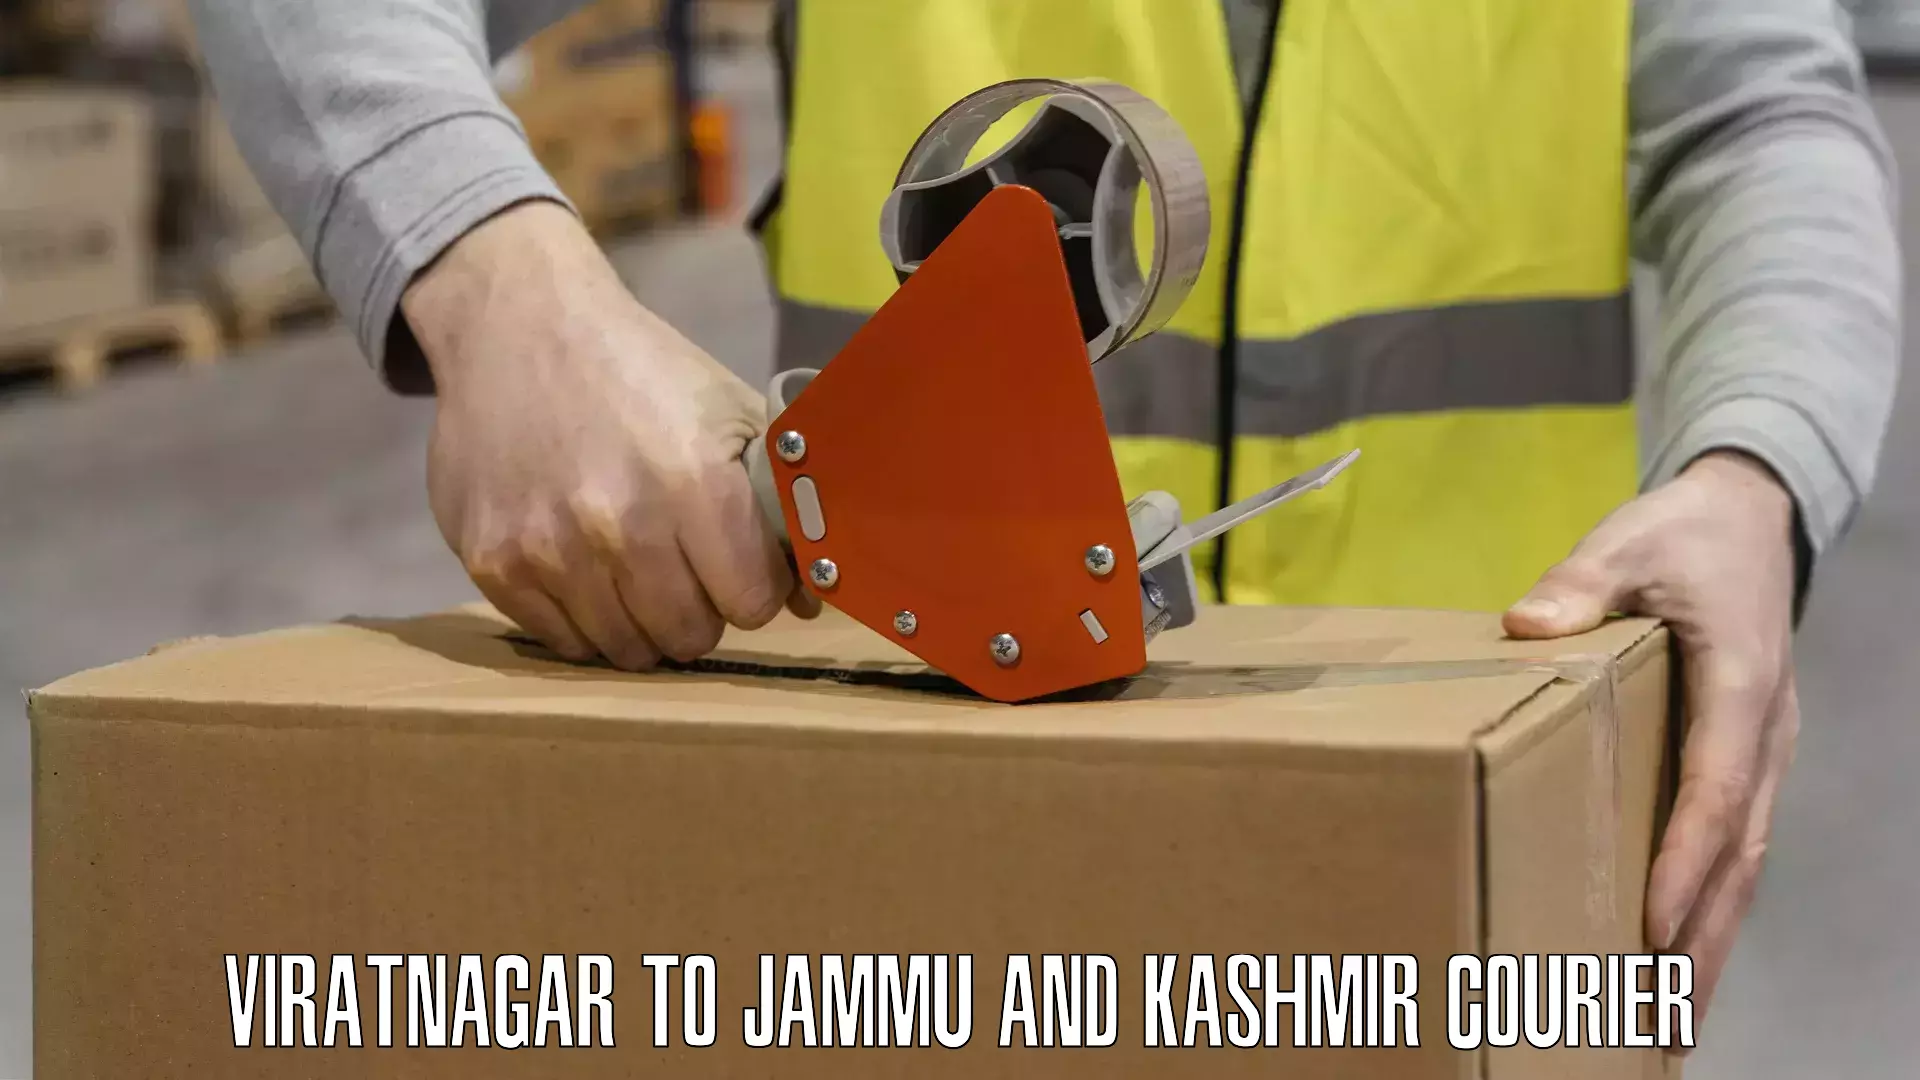 Professional delivery solutions Viratnagar to Srinagar Kashmir